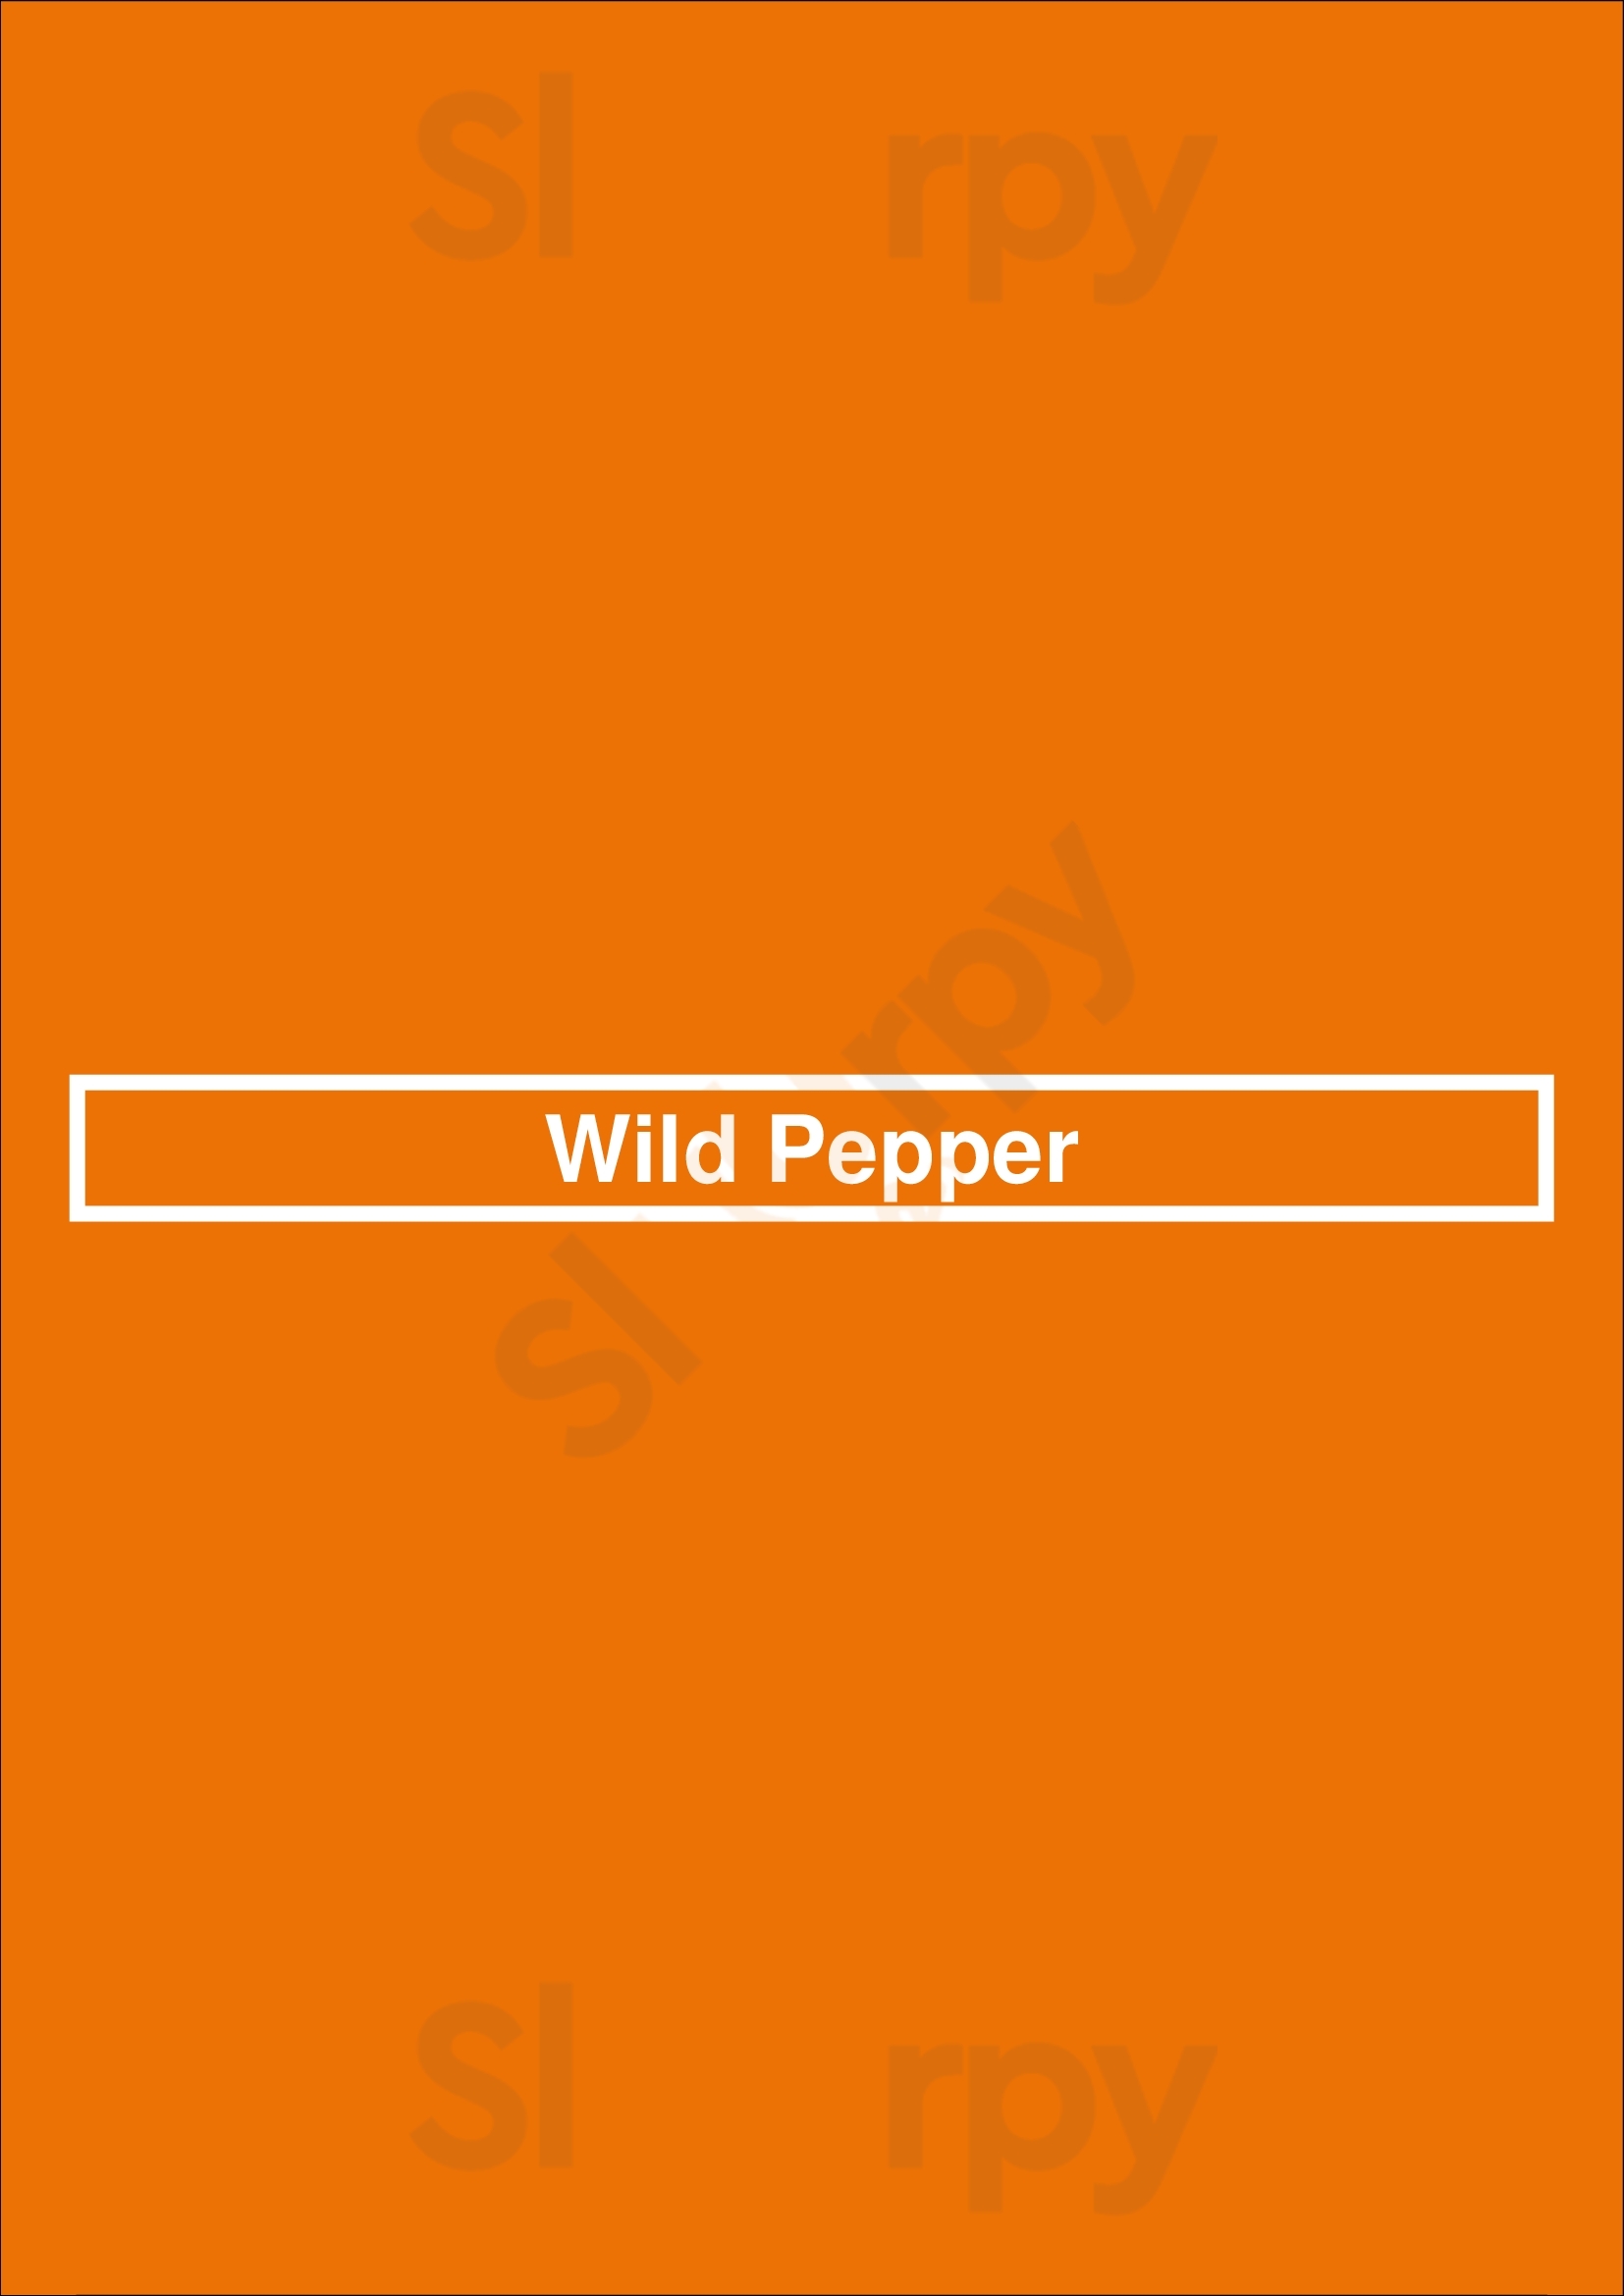 Wild Pepper San Francisco Menu - 1